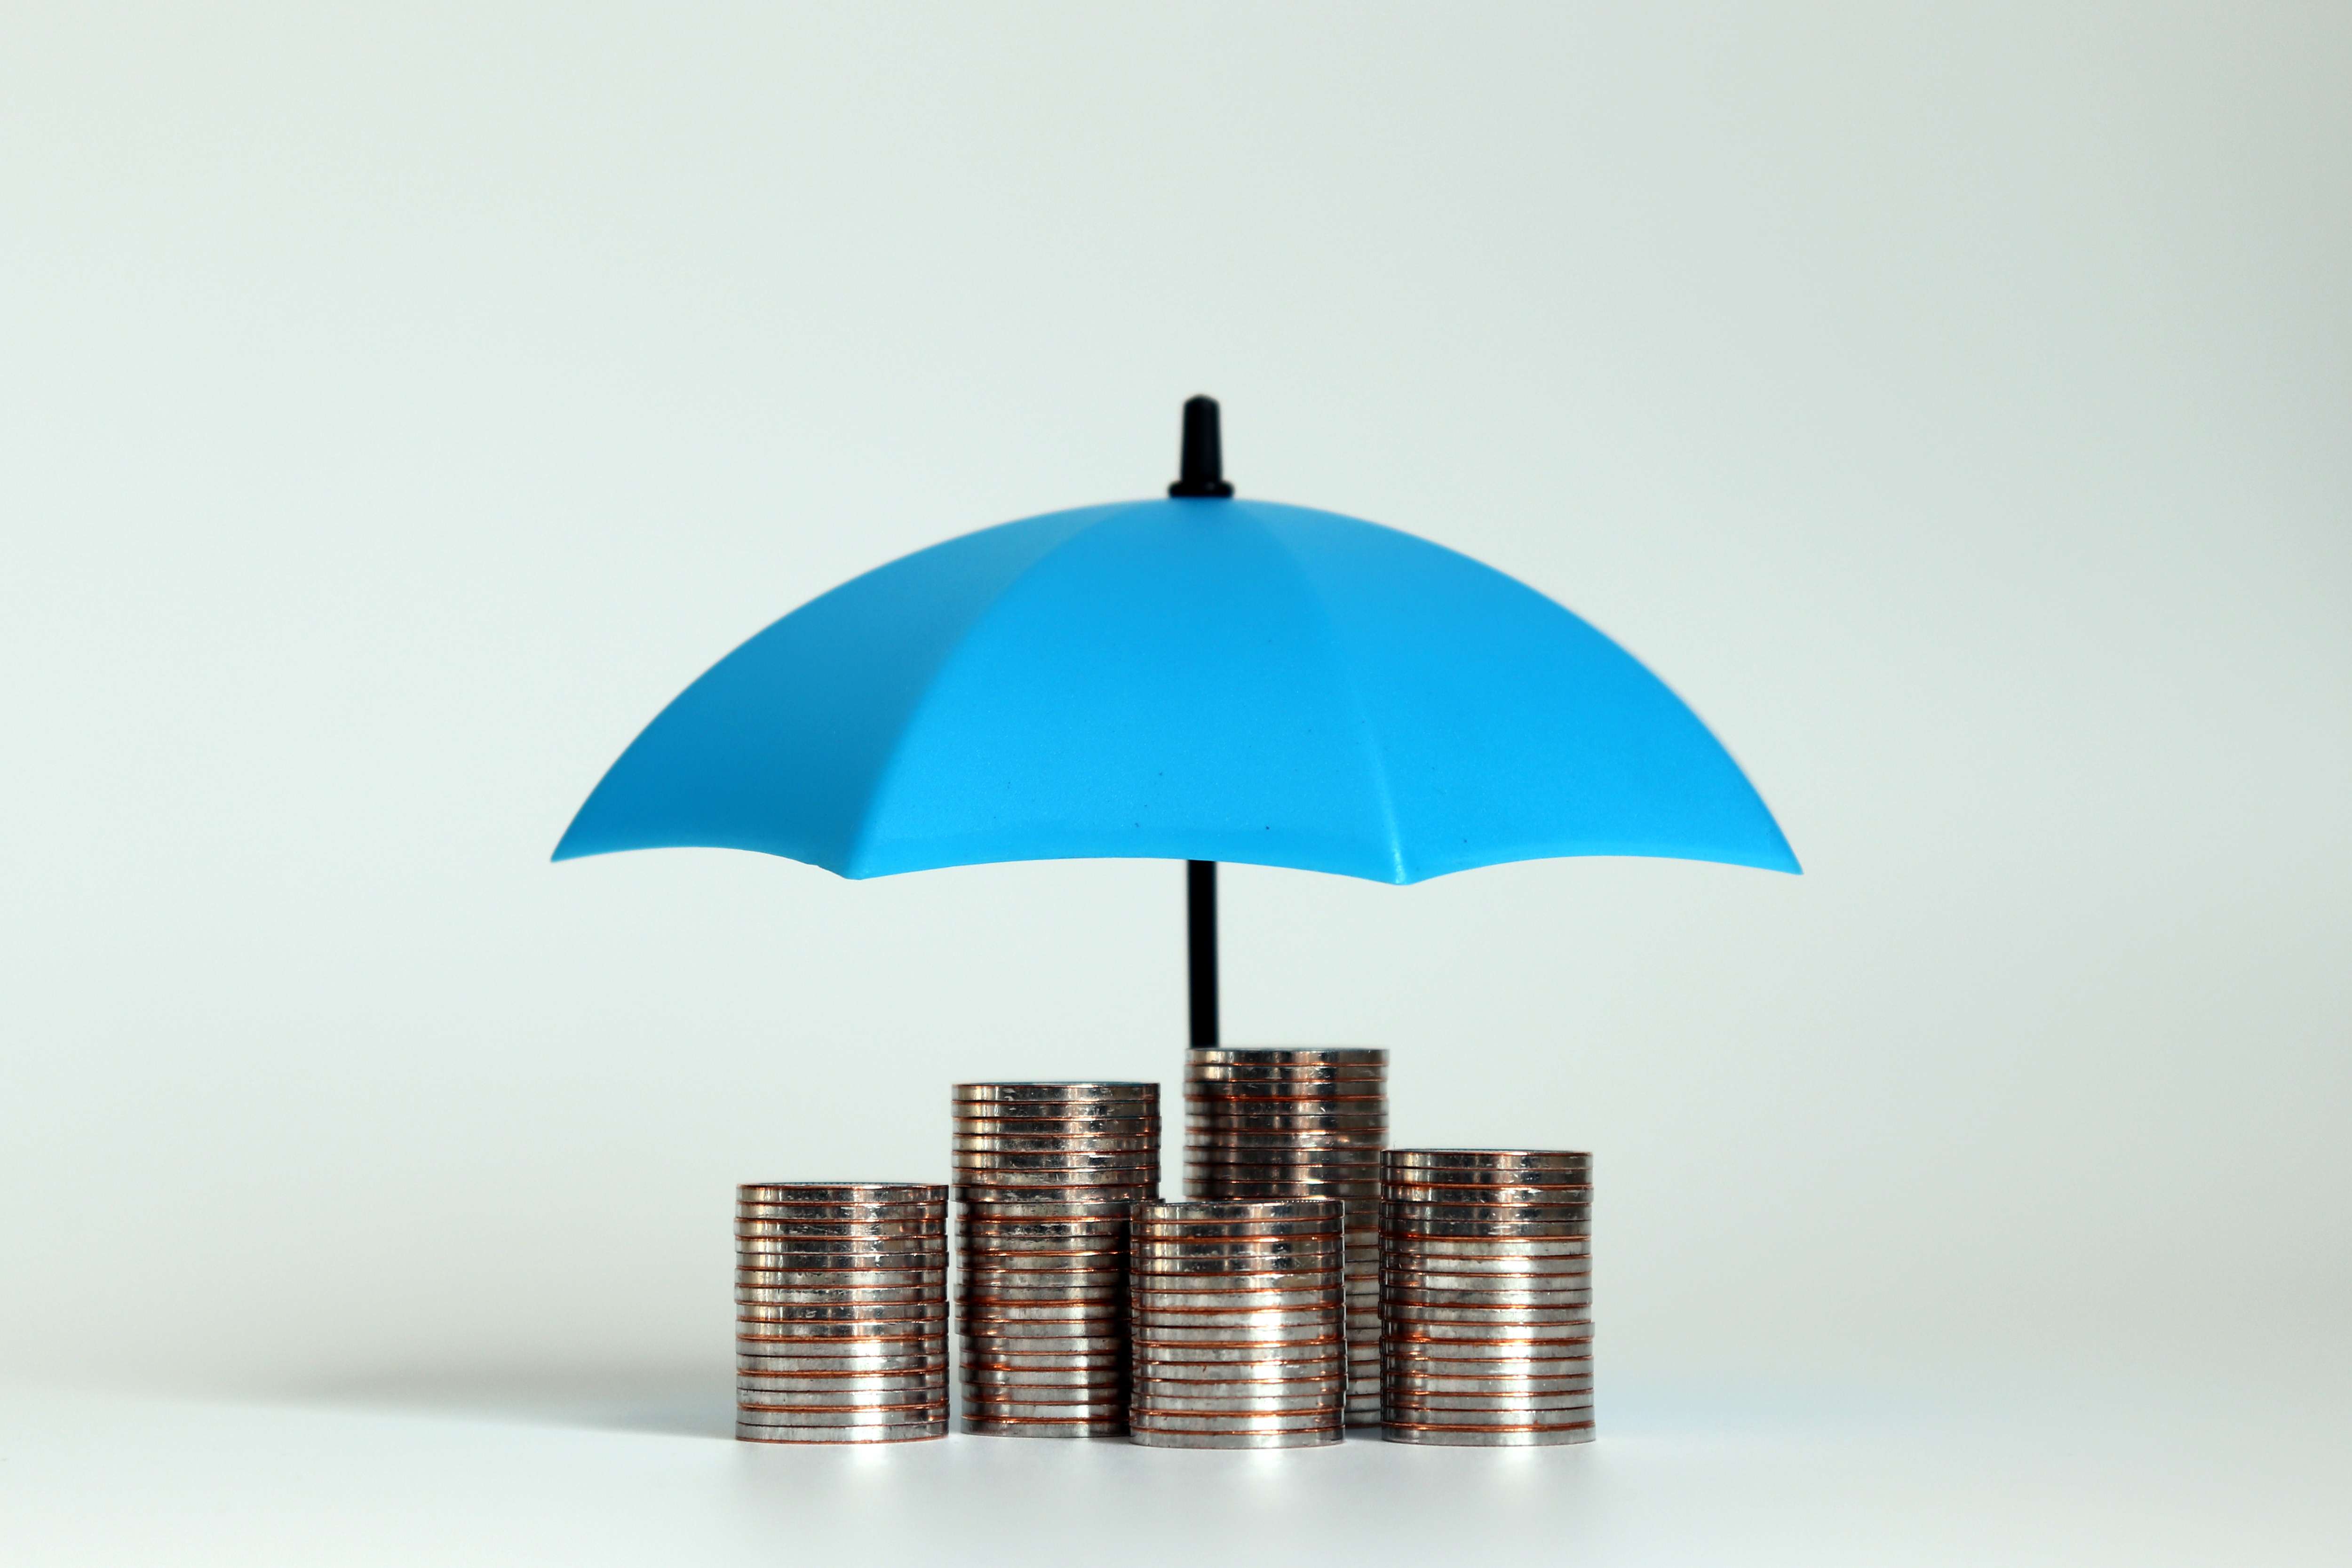 Umbrella and coins